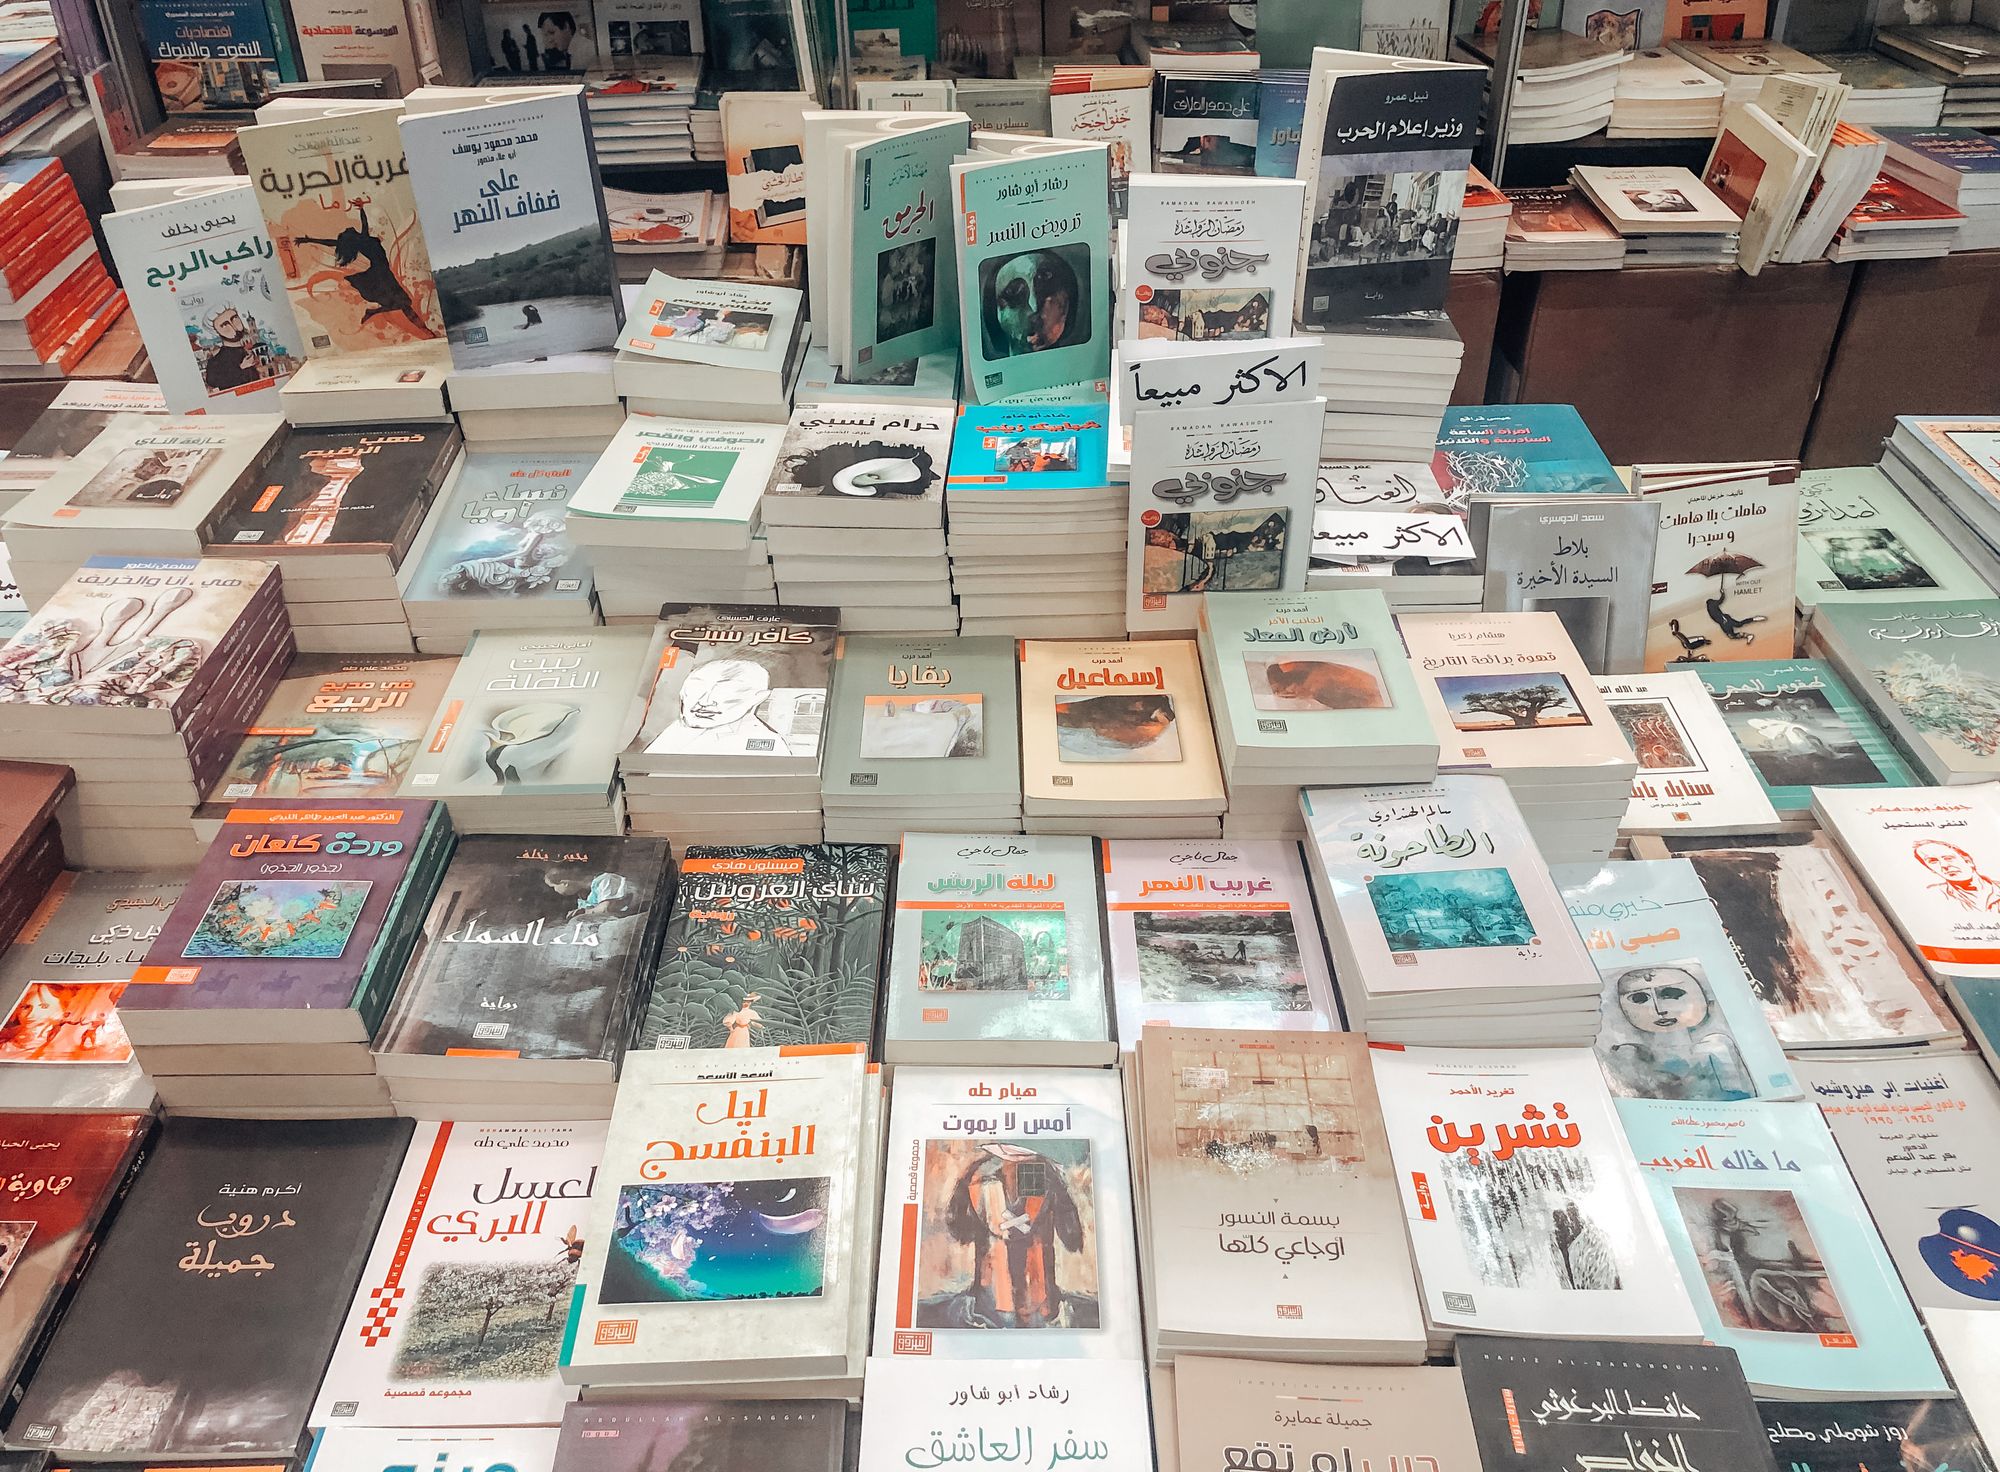 3 Reasons Why You Should Visit The Doha International Book Fair 2020